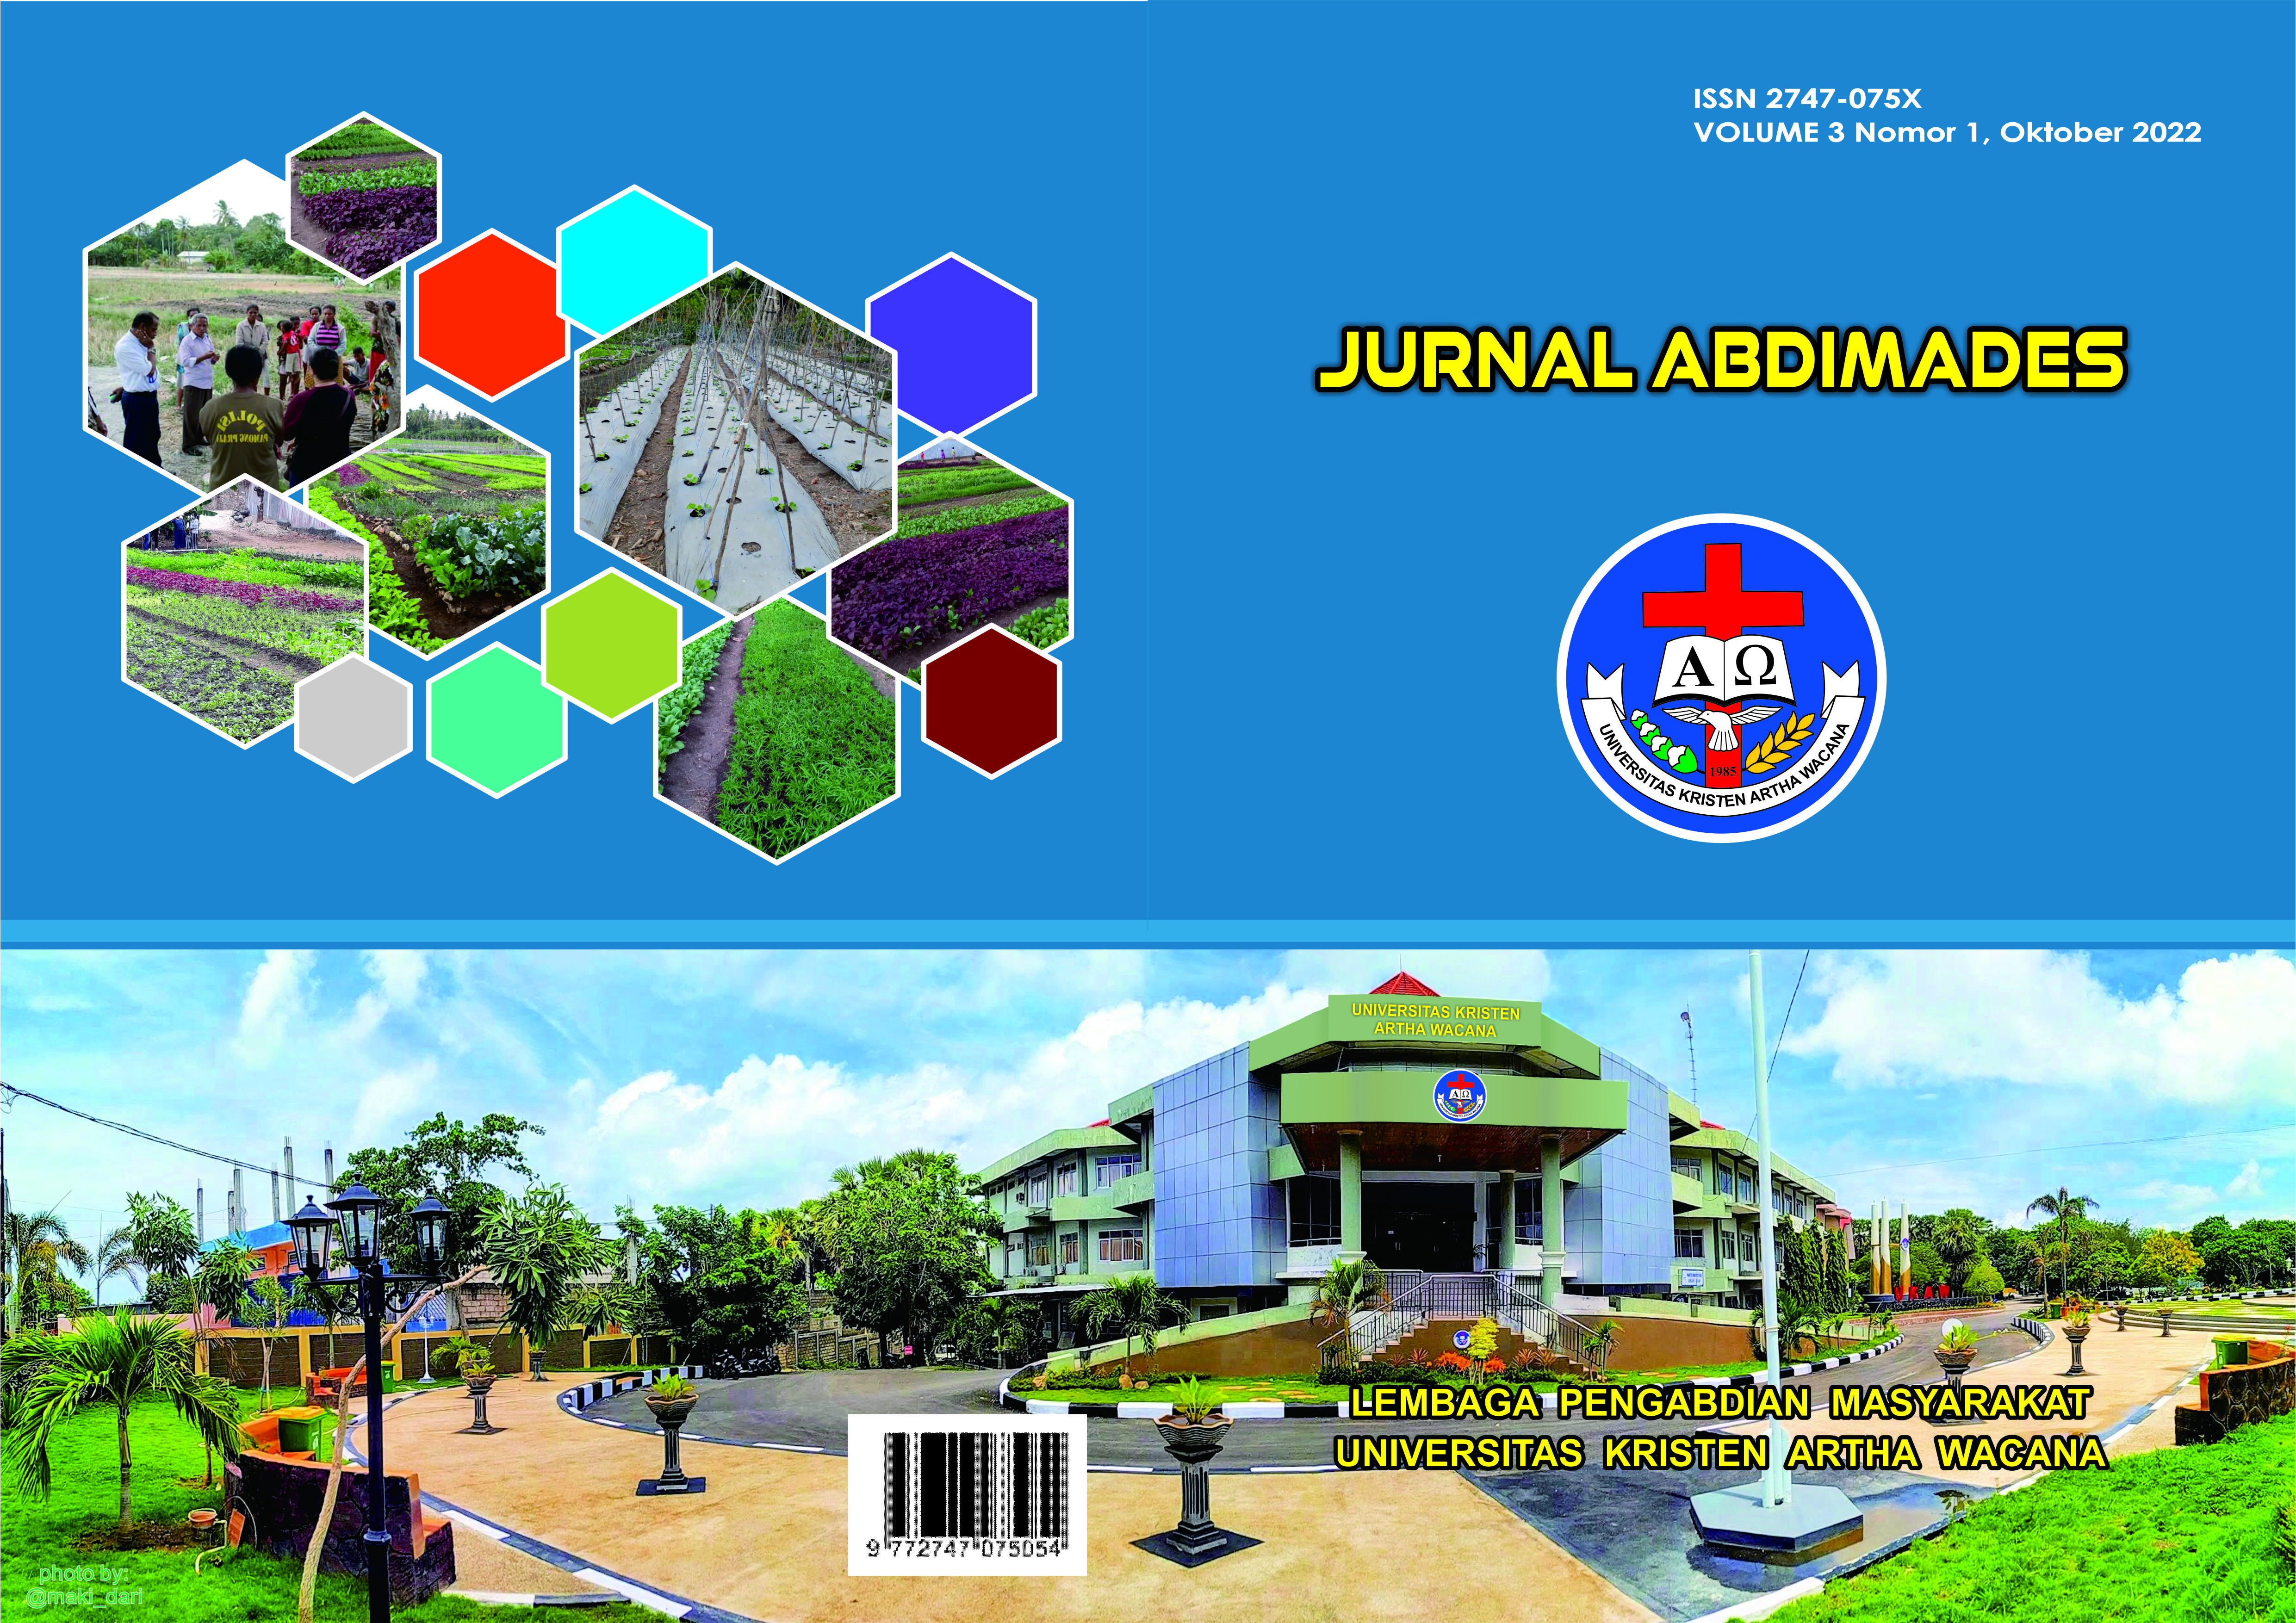 					Lihat Vol 3 No 1 (2022): Jurnal ABDIMADES ISSN 2747-075X
				